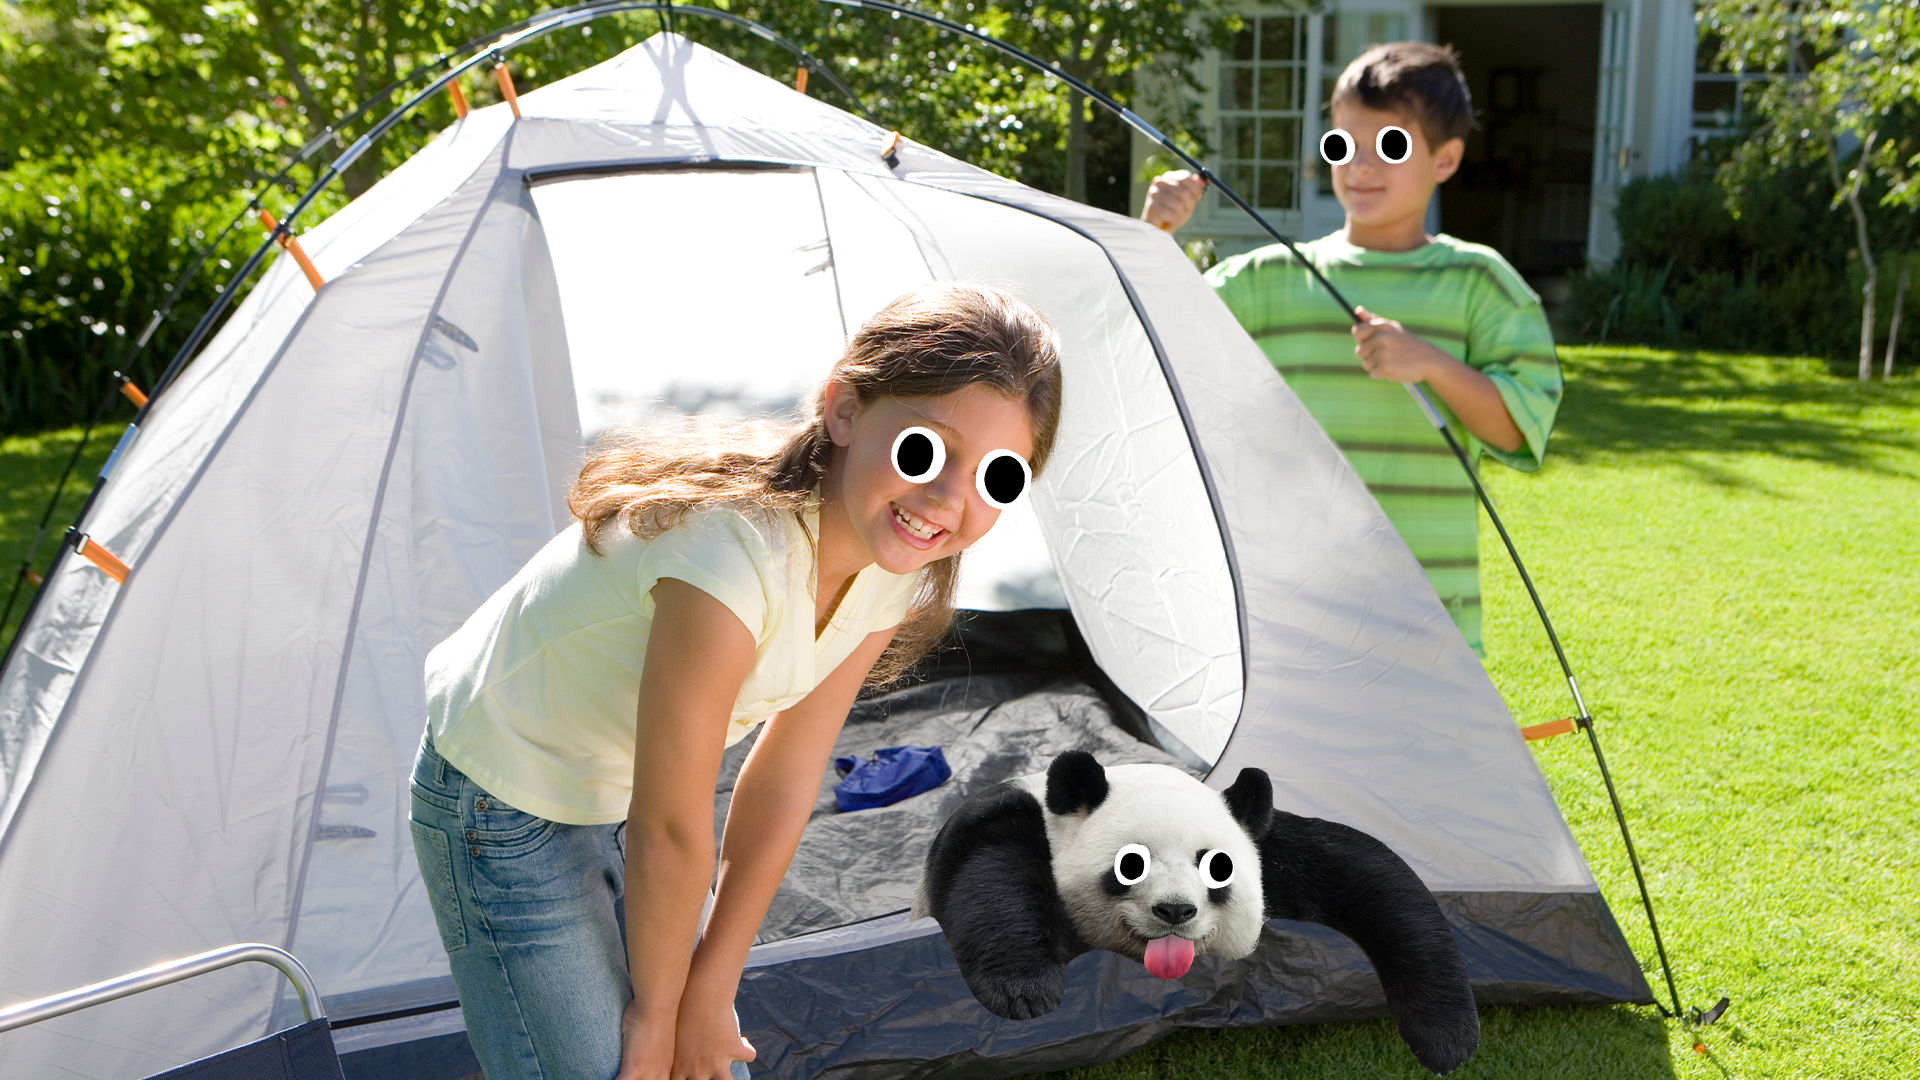 Children camping in garden with derpy panda